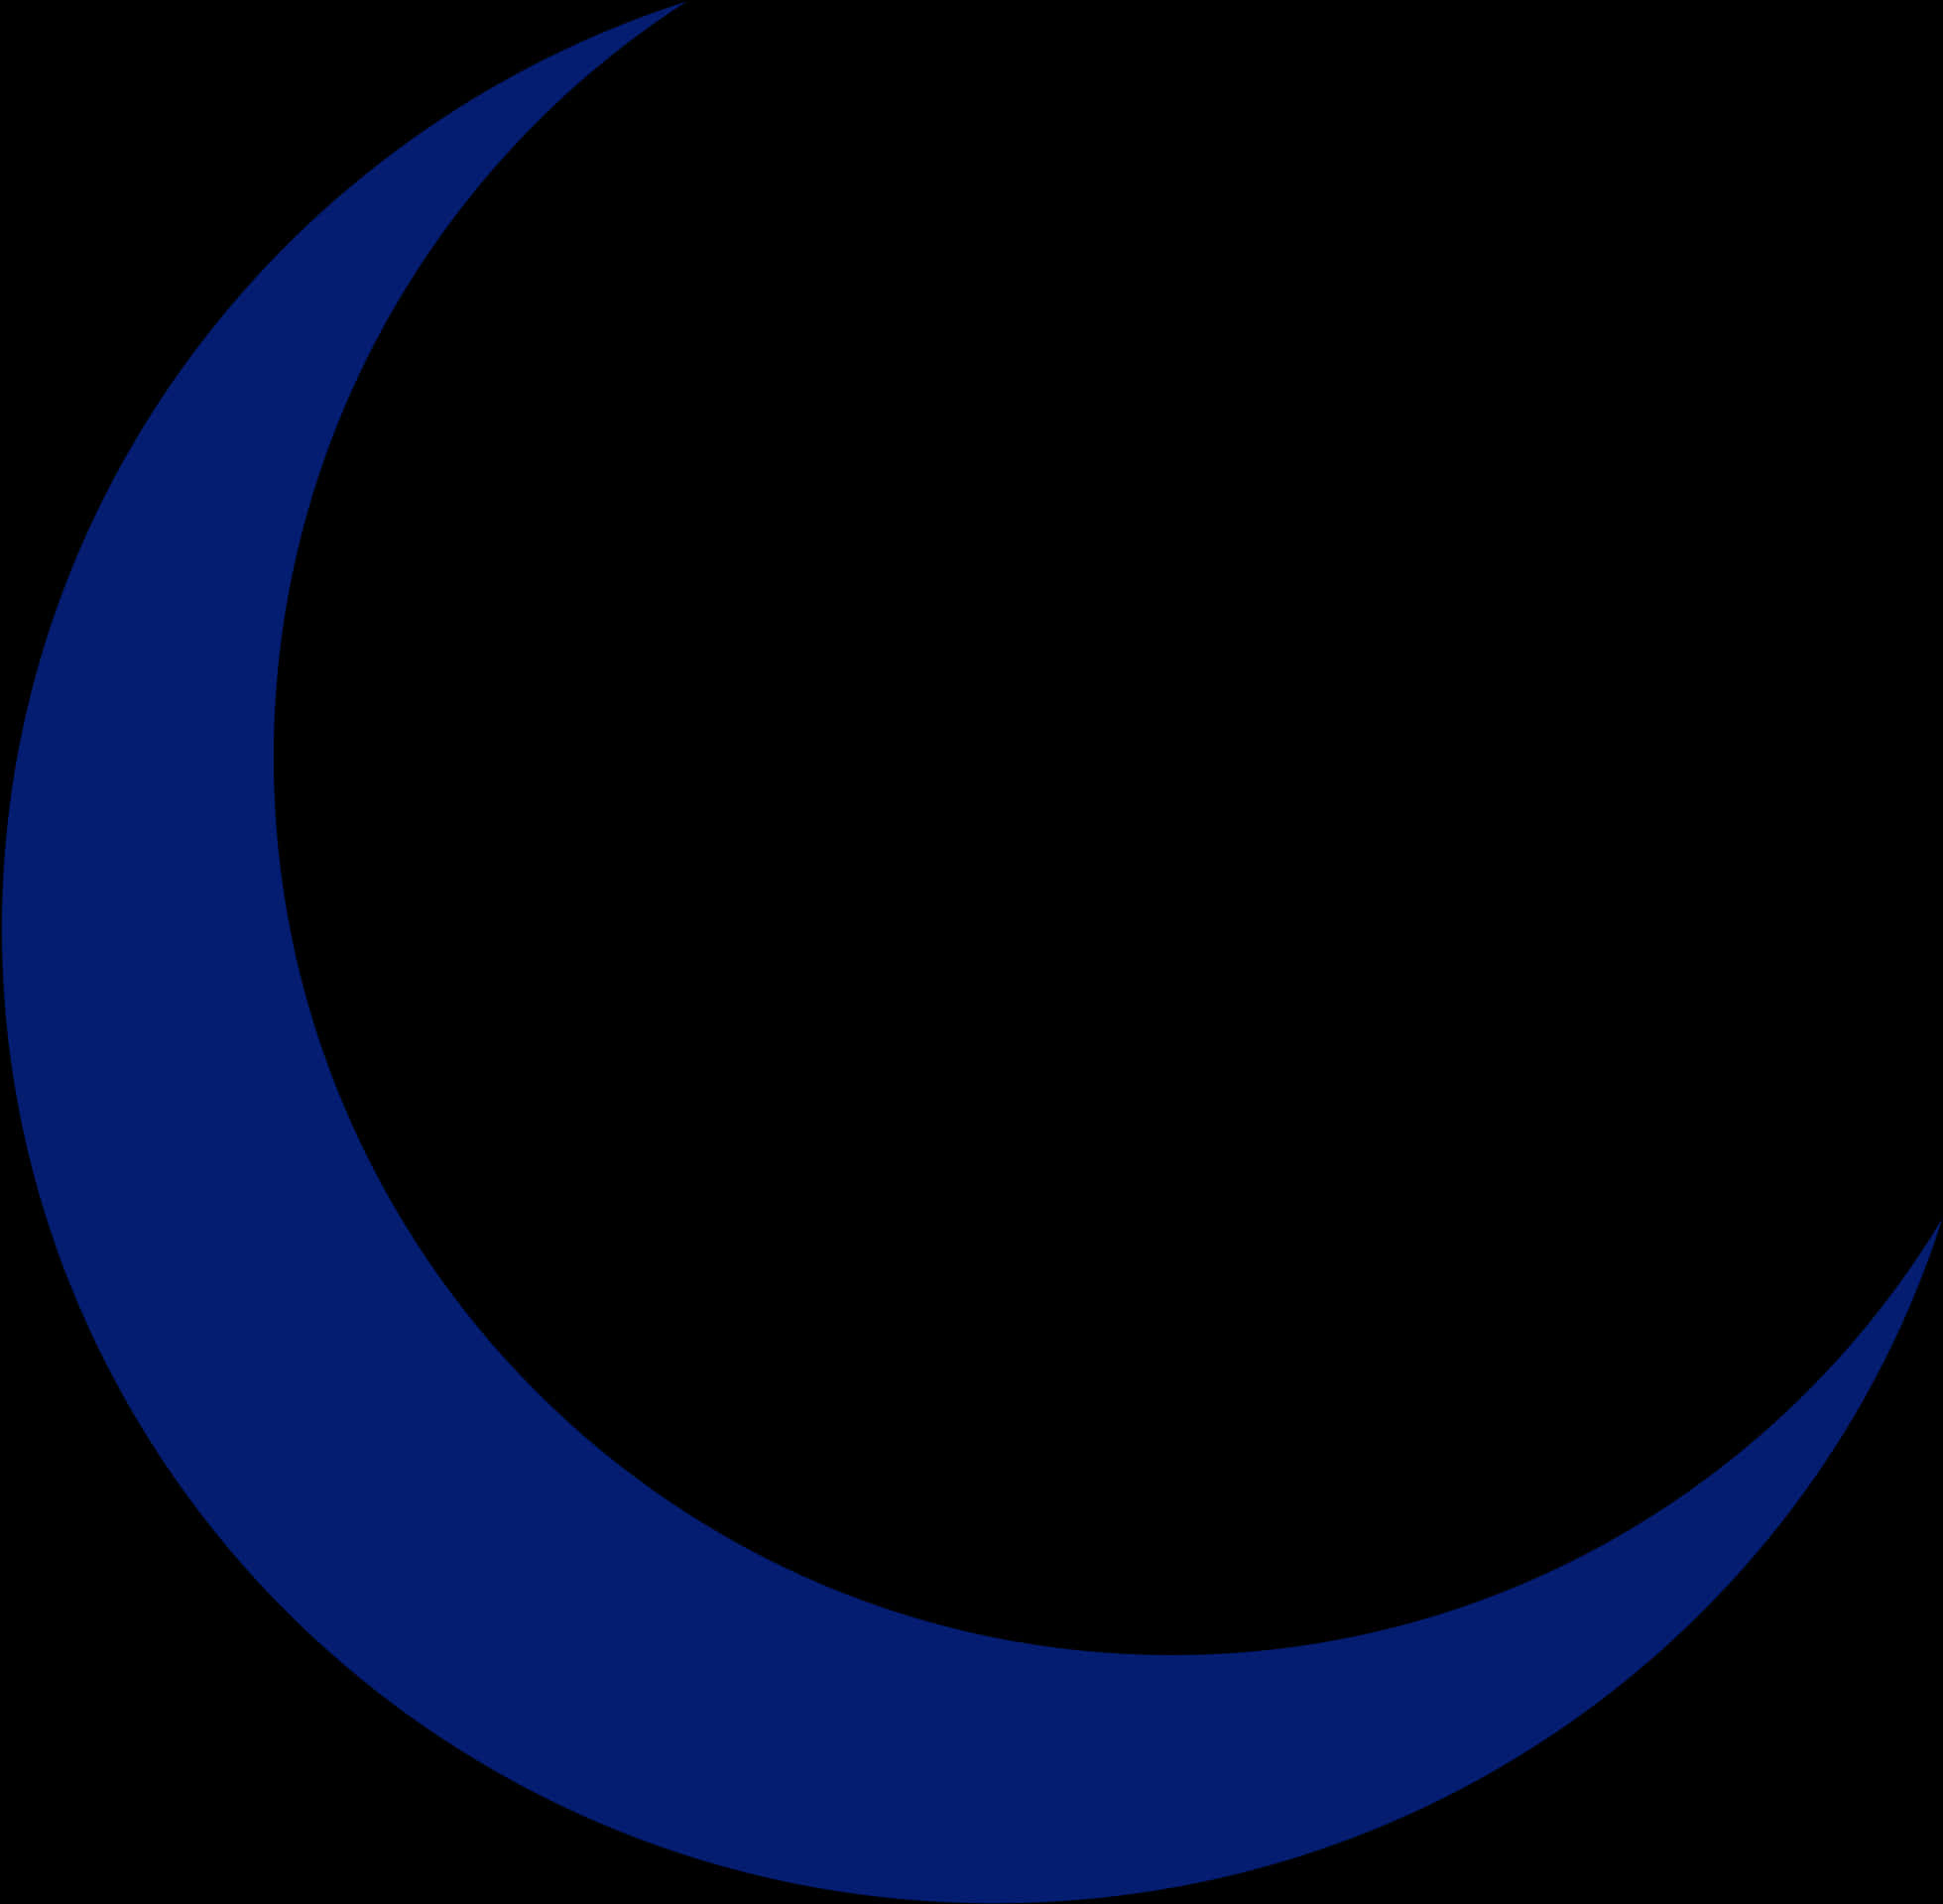 Blue Crescent Moon Graphic